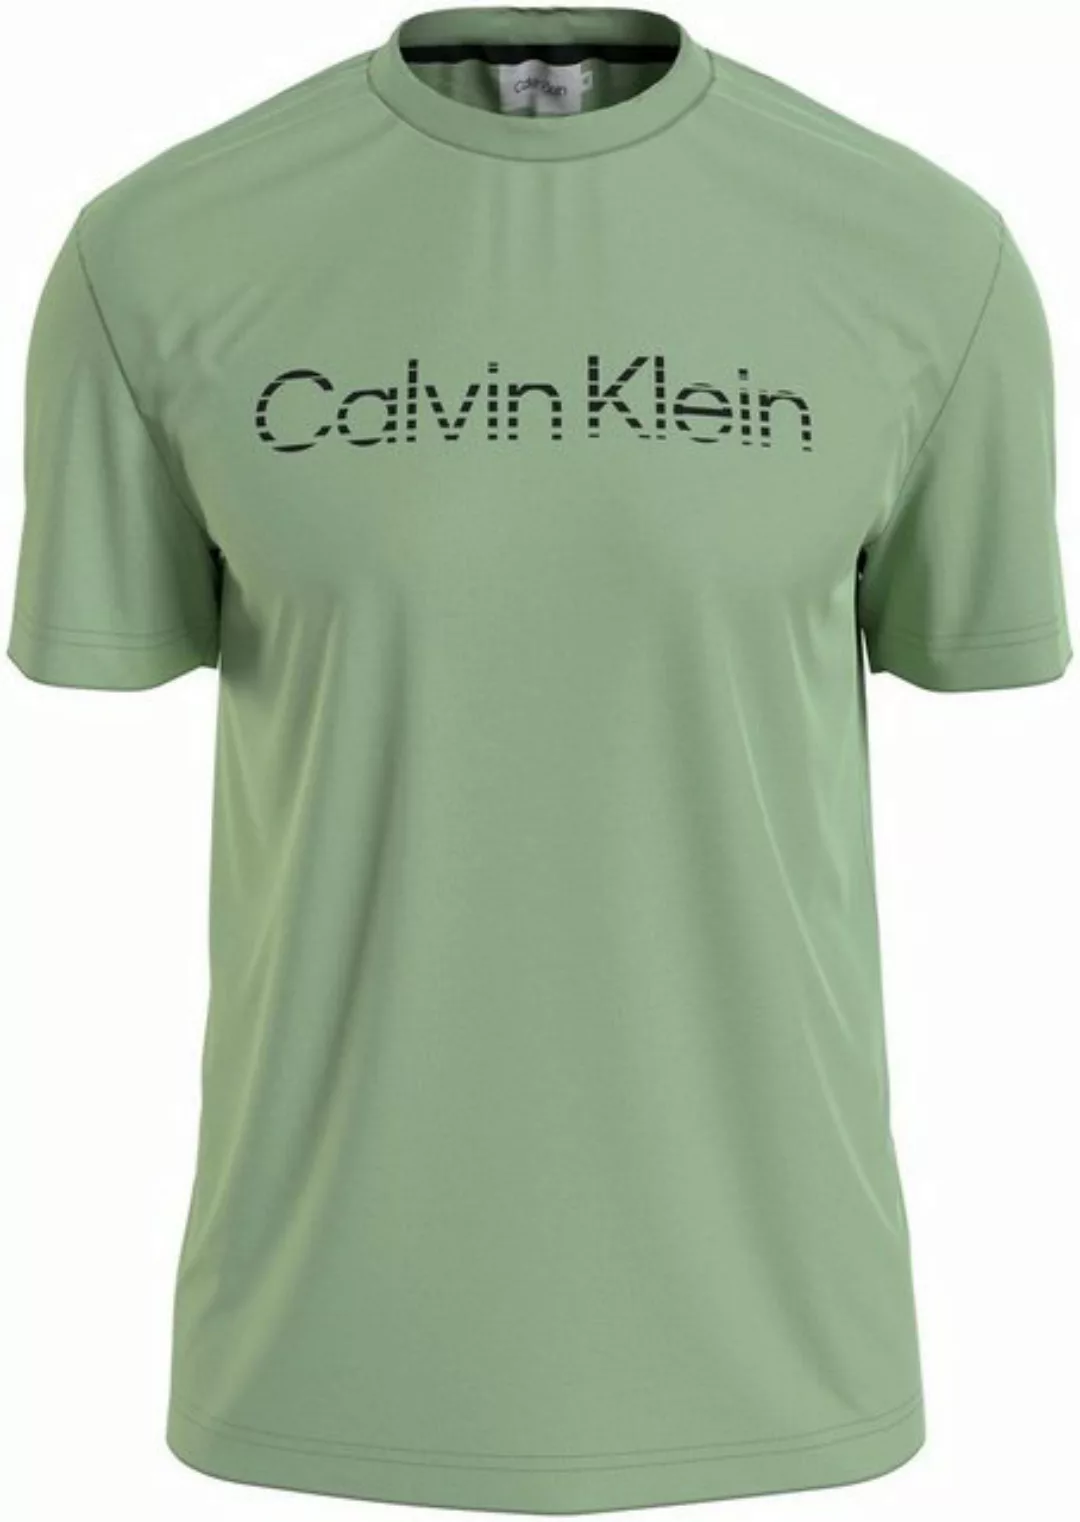 Calvin Klein T-Shirt DEGRADE LOGO T-SHIRT günstig online kaufen